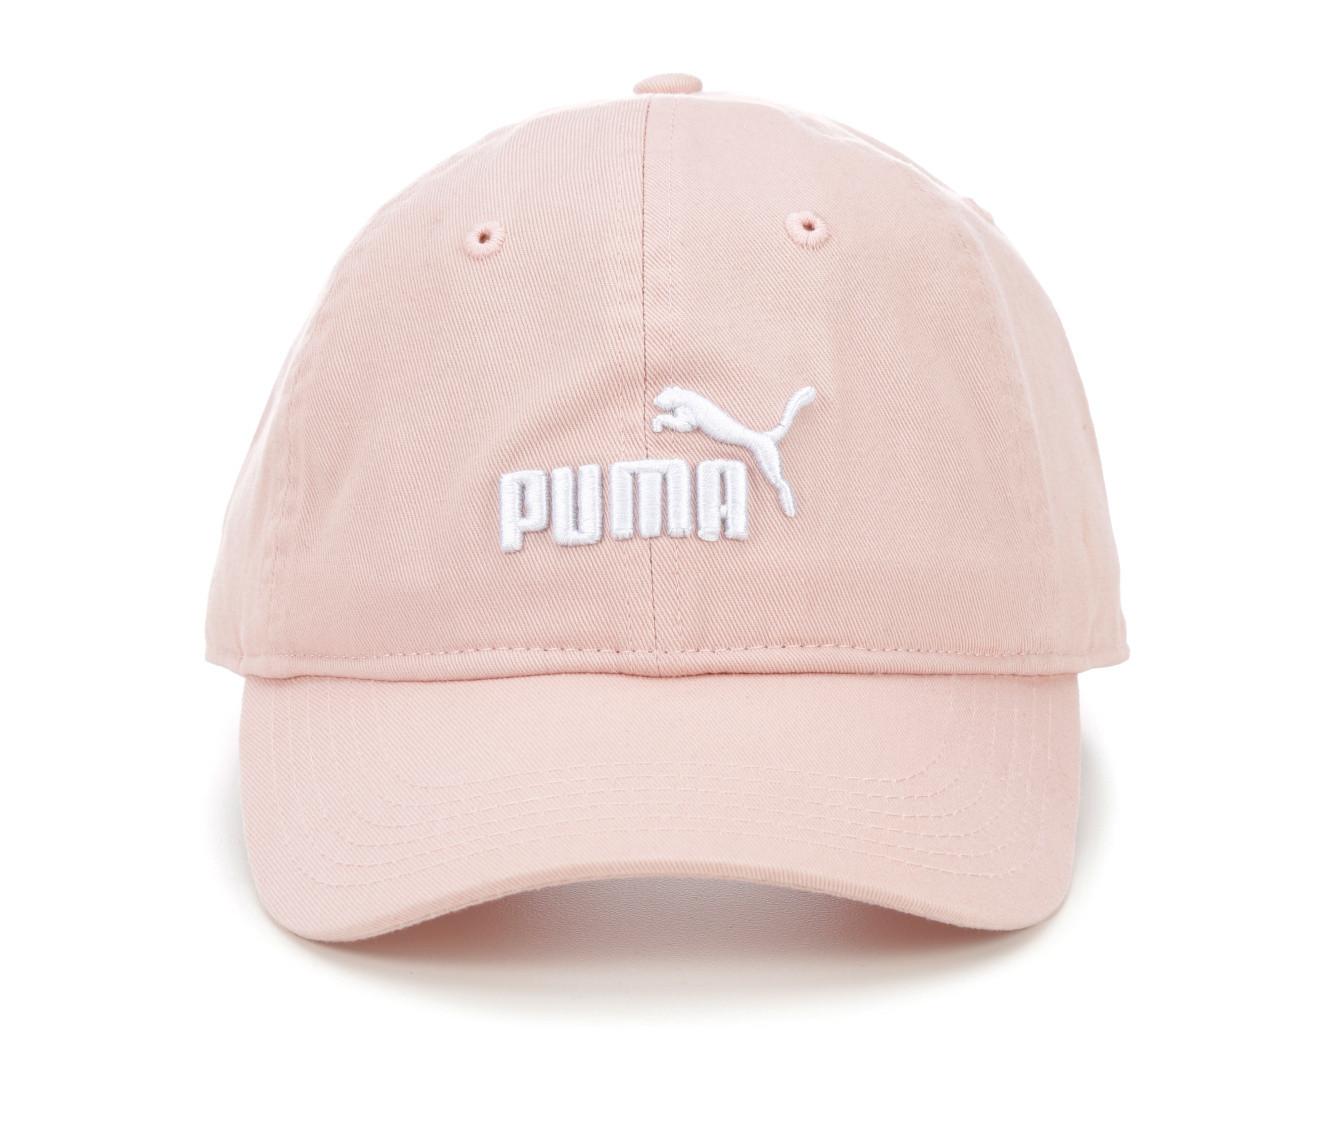 Puma Women's Archive 1 Adjustable Cap